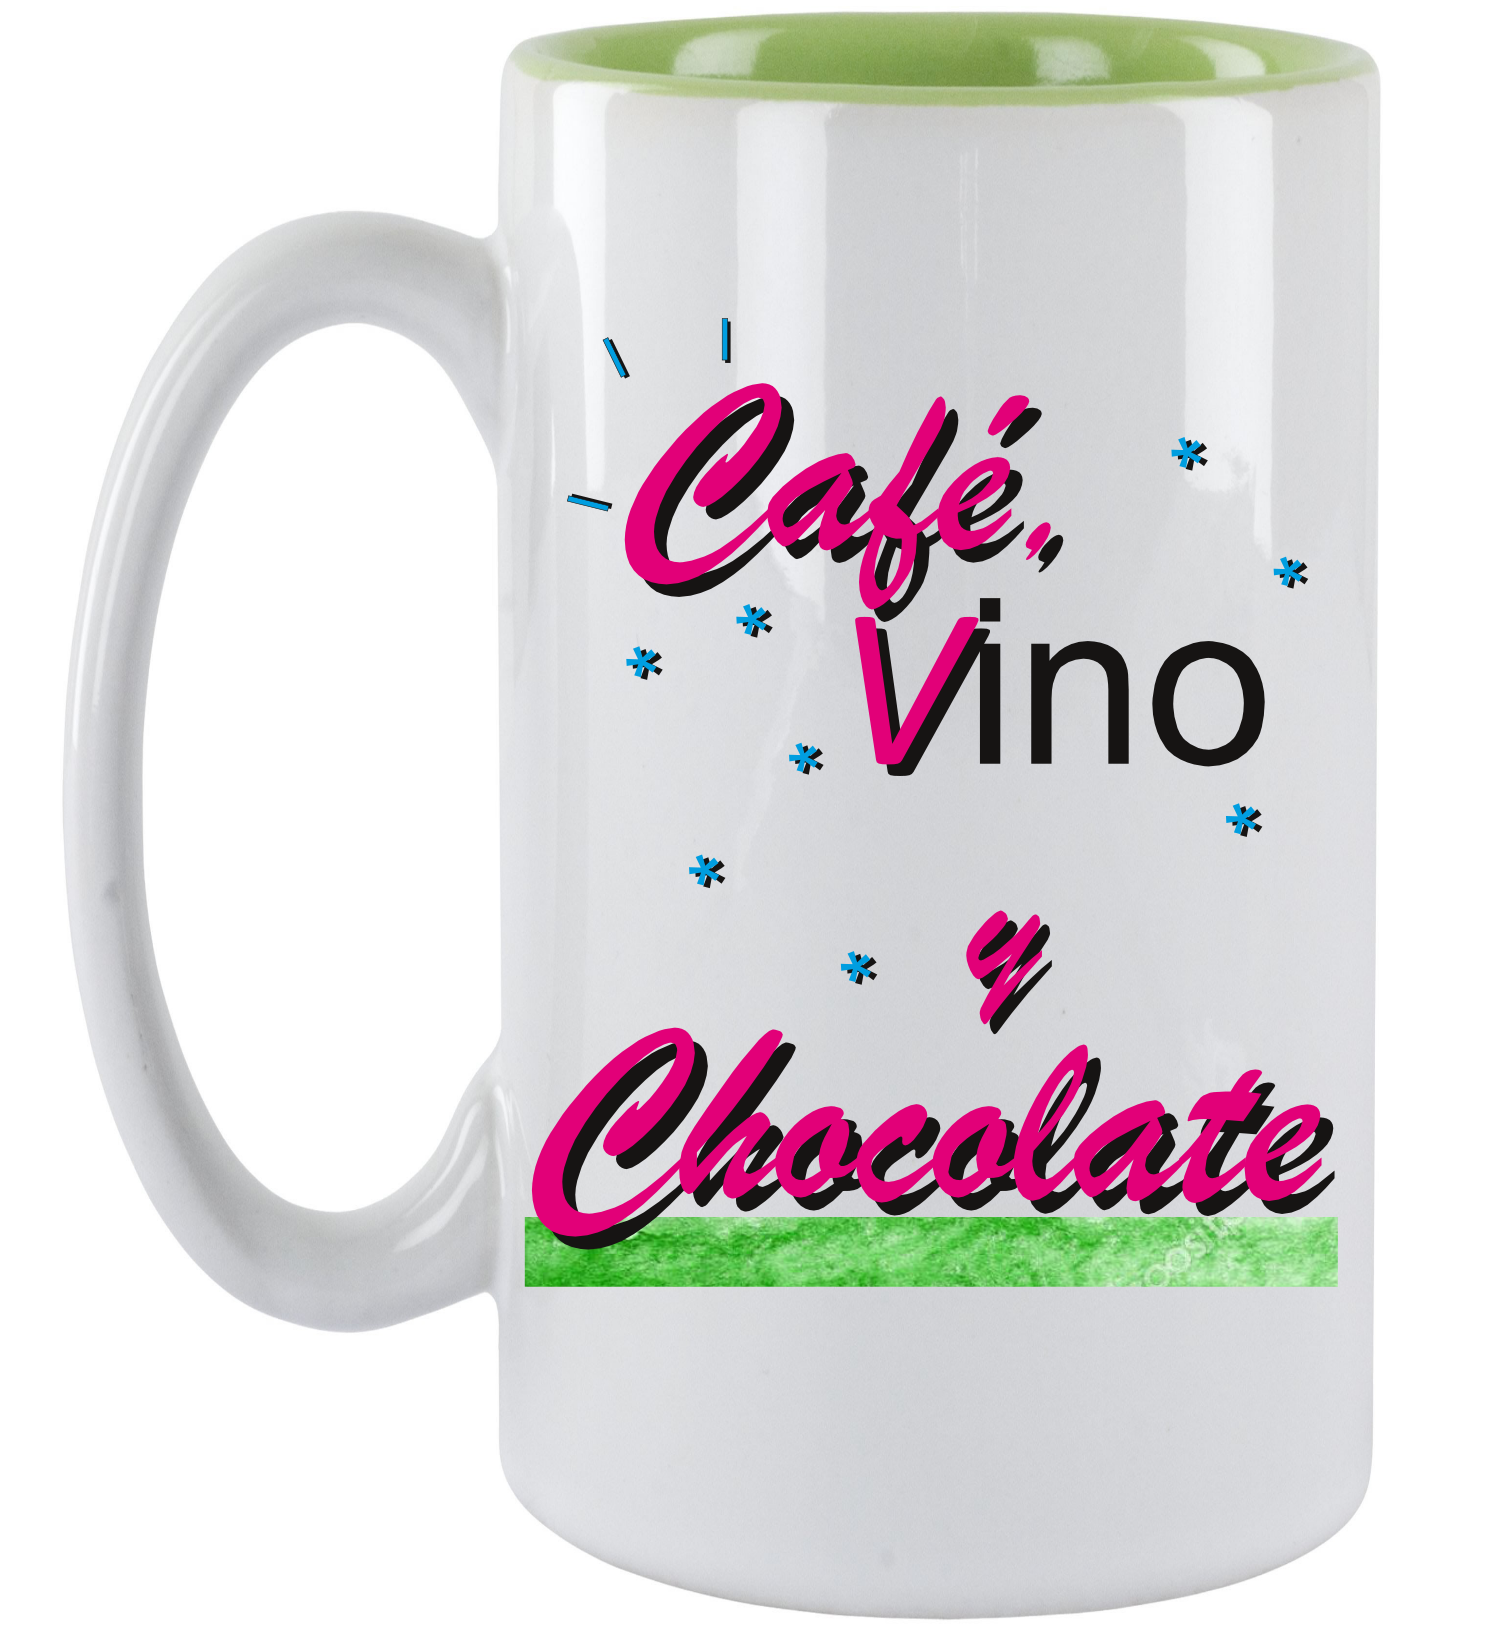 CAF, VINO Y CHOCOLATE